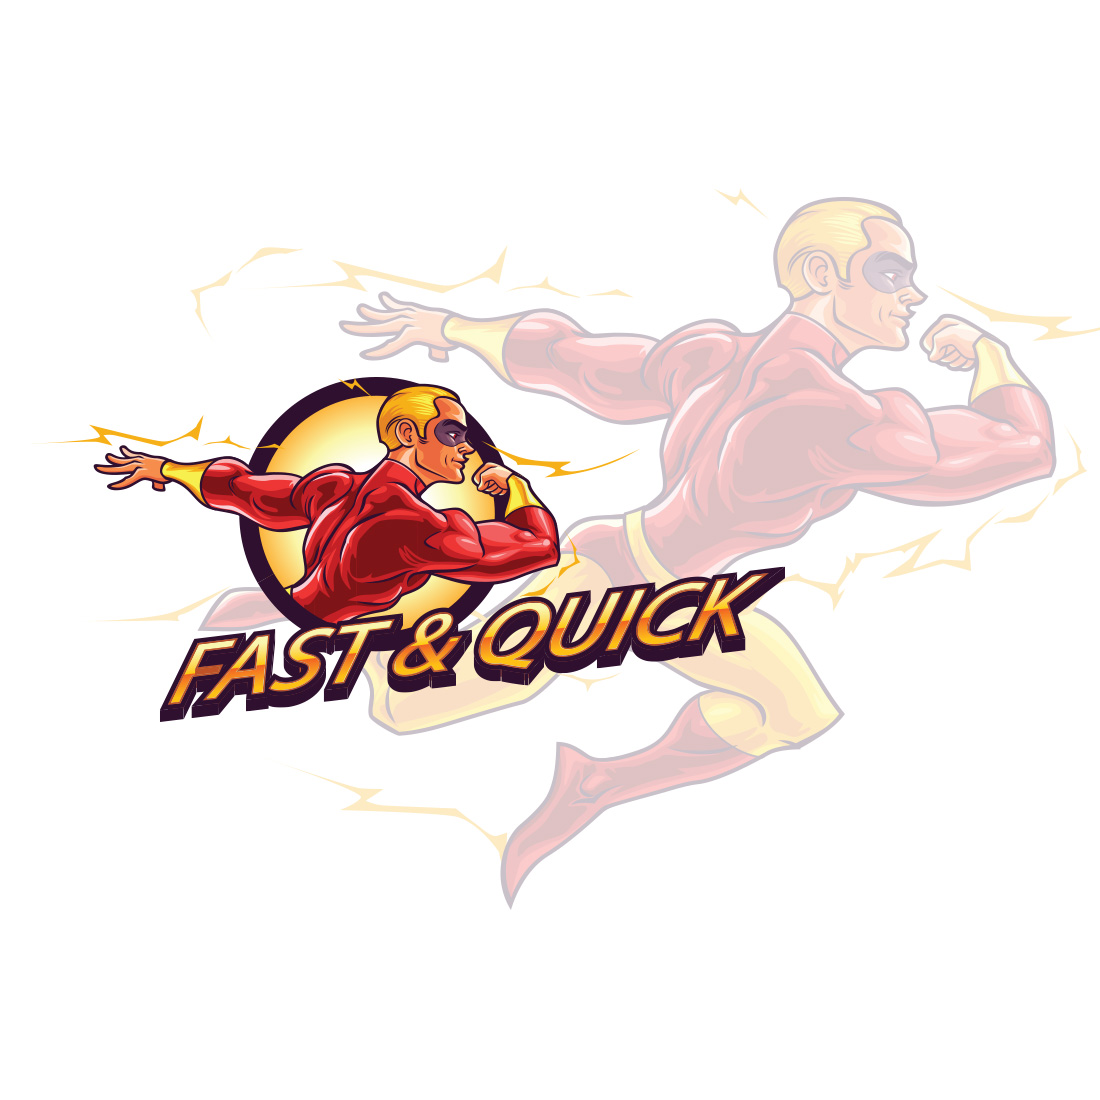 Fast And Quick Super Hero Mascot Logo cover image.